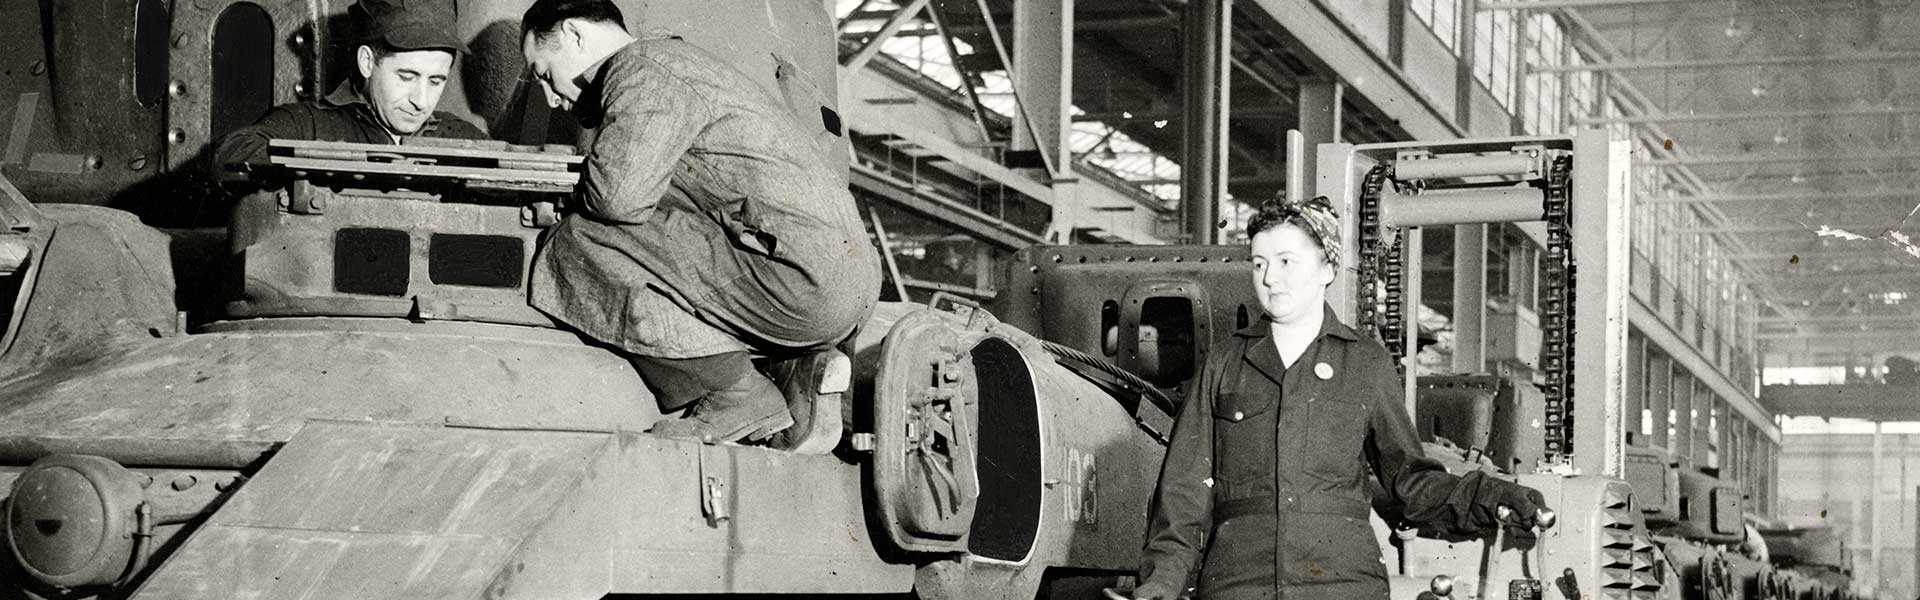 WW2 woman operator ram tank factory banner